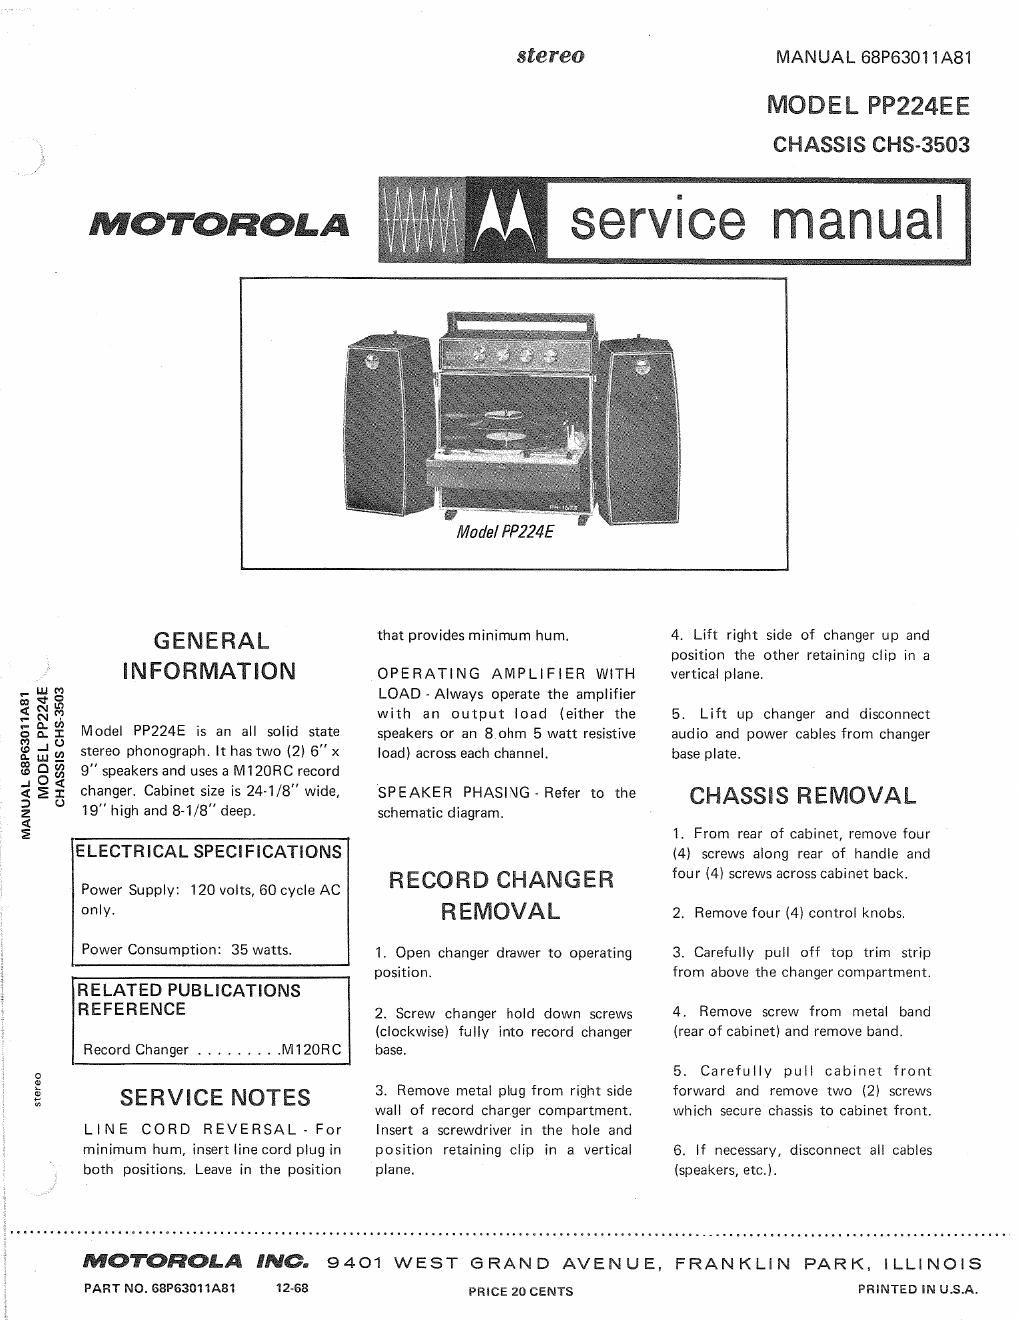 motorola pp 224 ee service manual